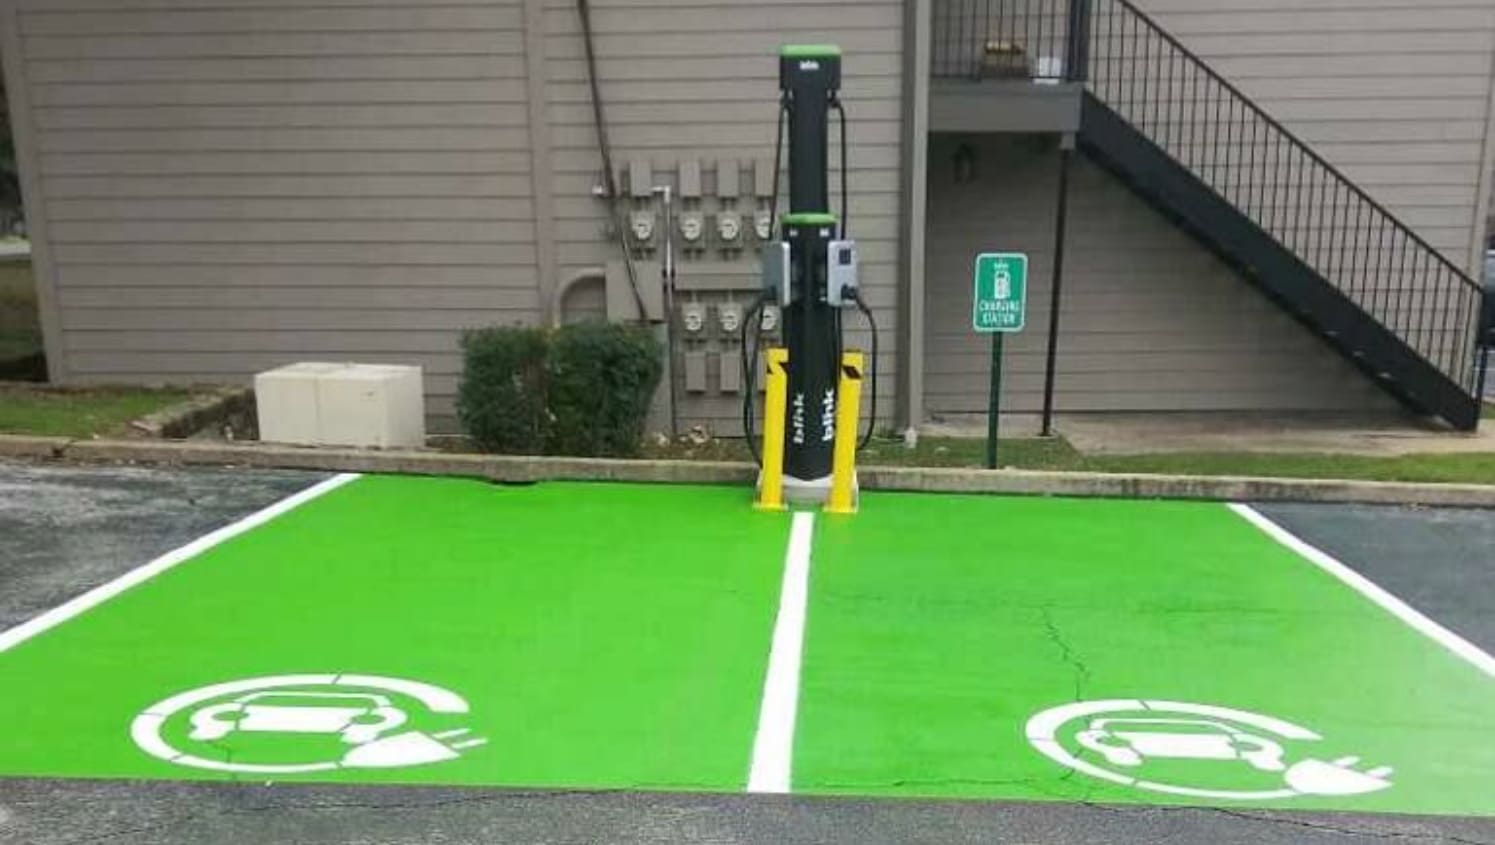 EV charging bay markings in Austin, TX